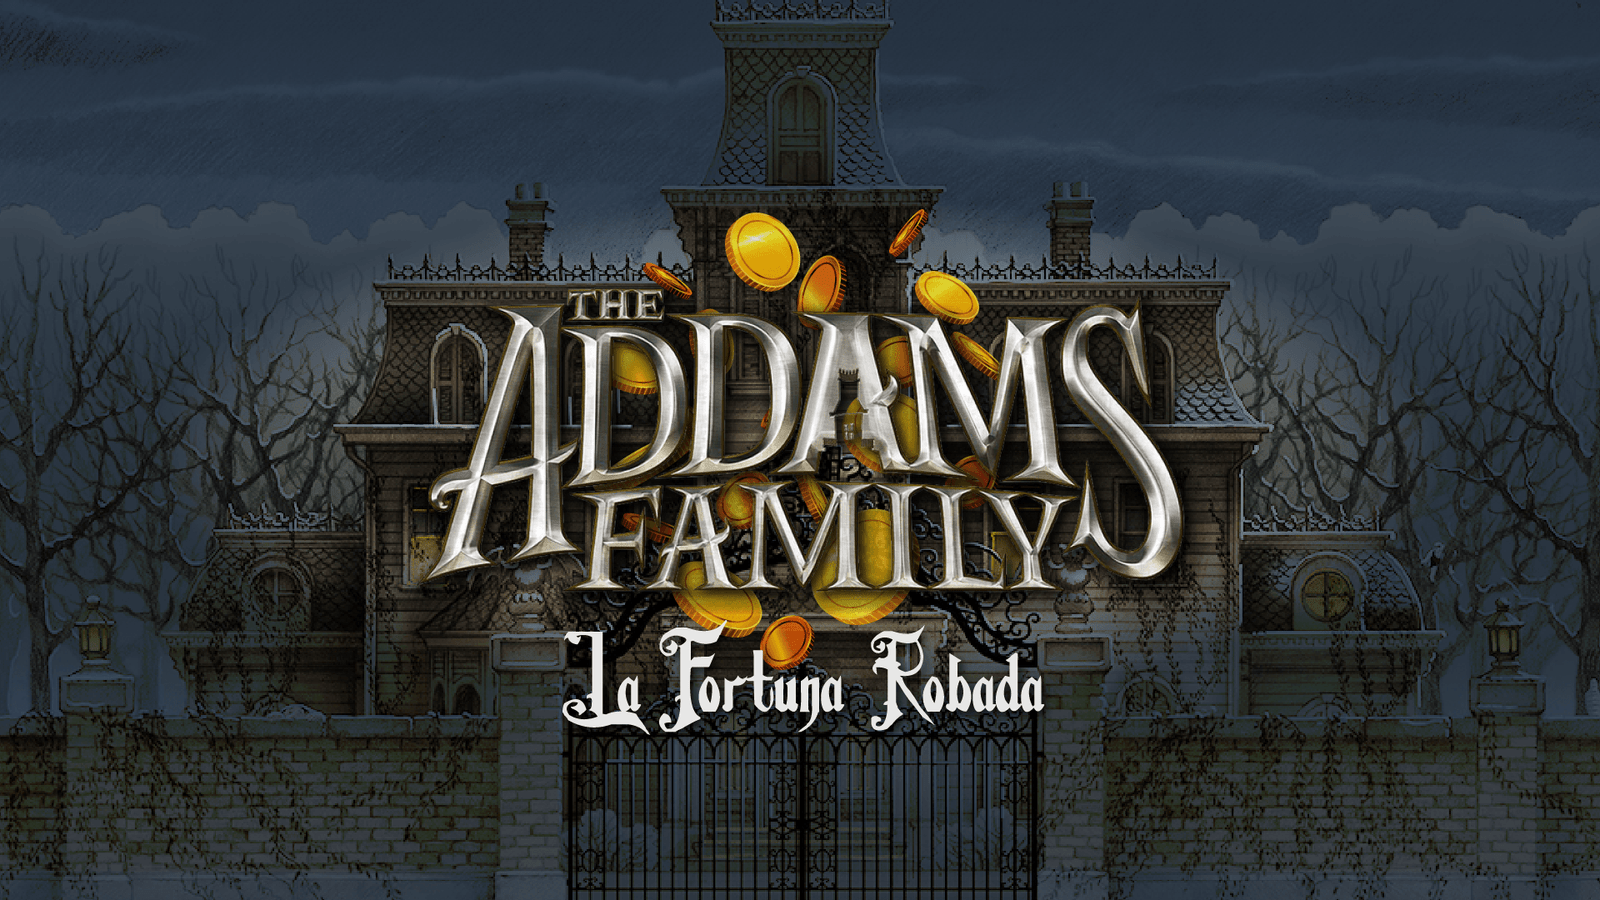 THE ADDAMS FAMILY - LA FORTUNA ROBADA